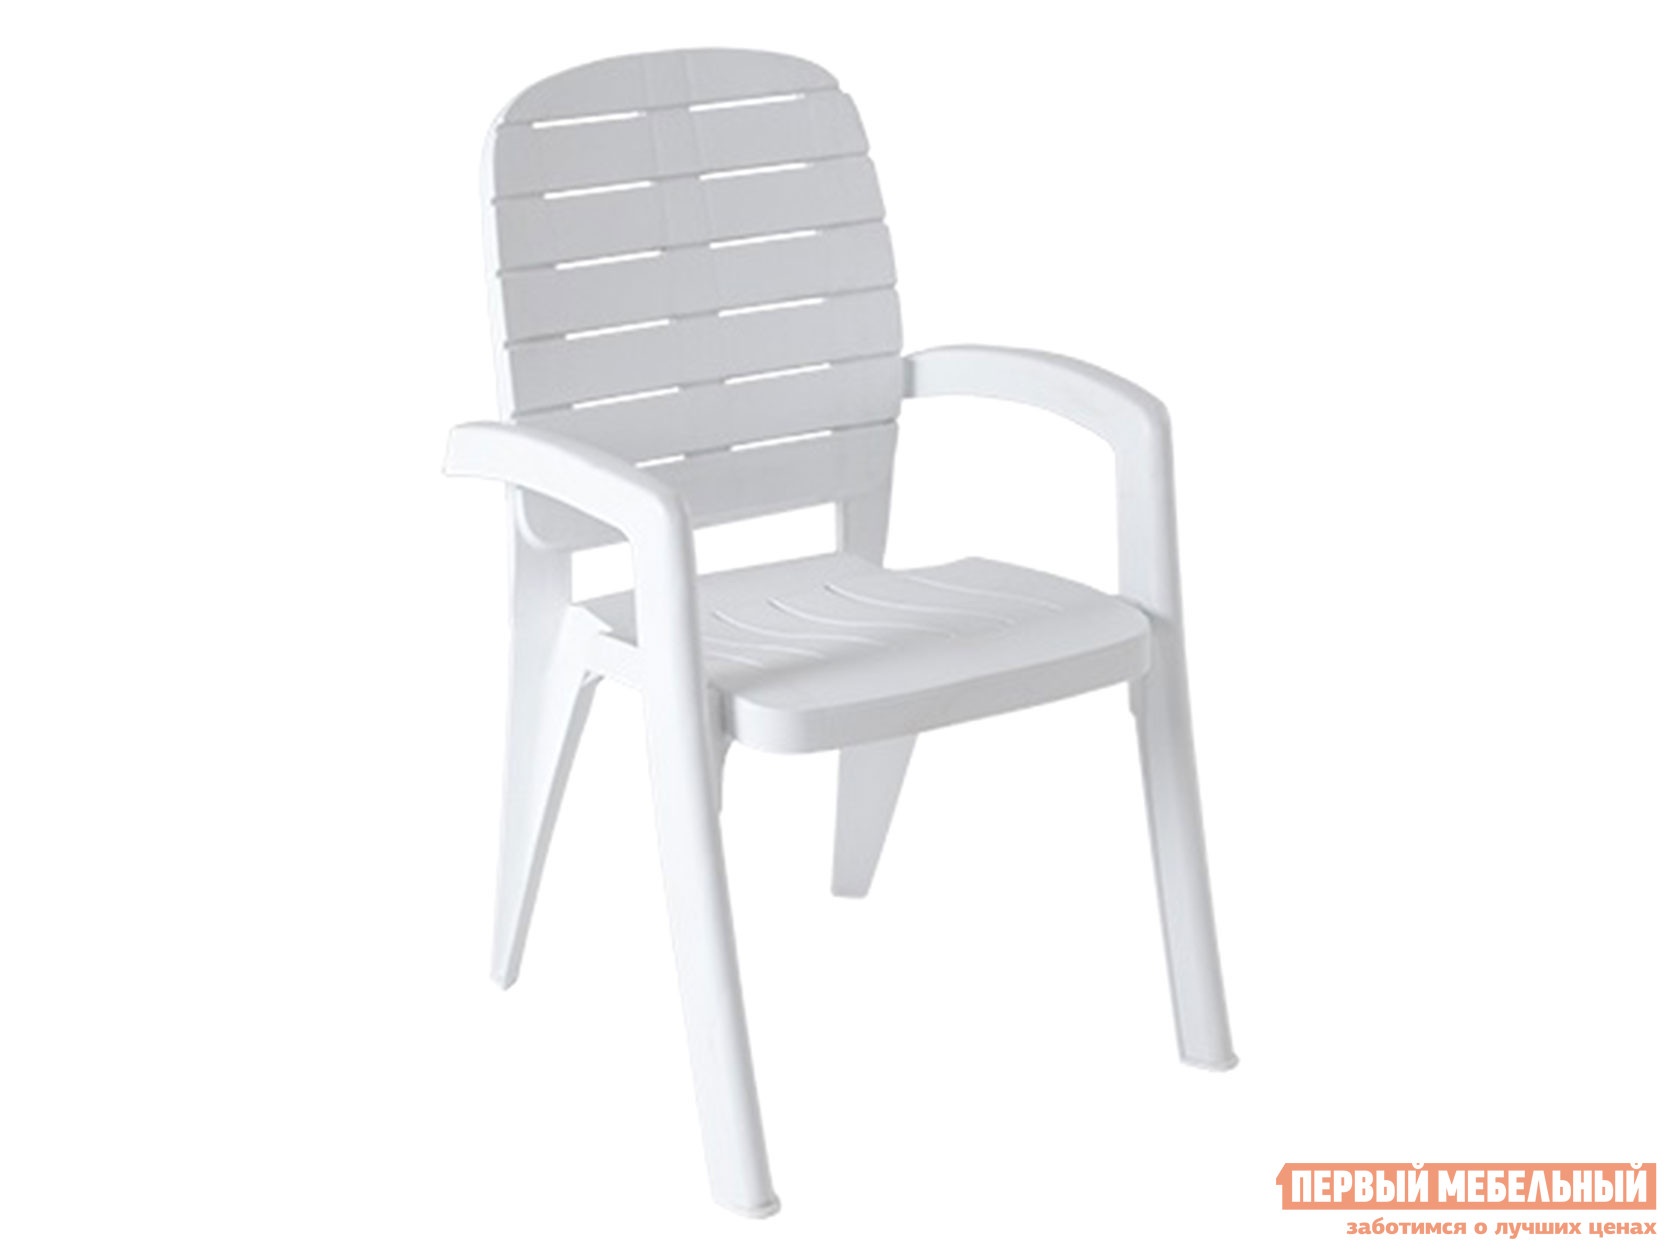 Пластиковый стул прованс белый, пластик preview 1